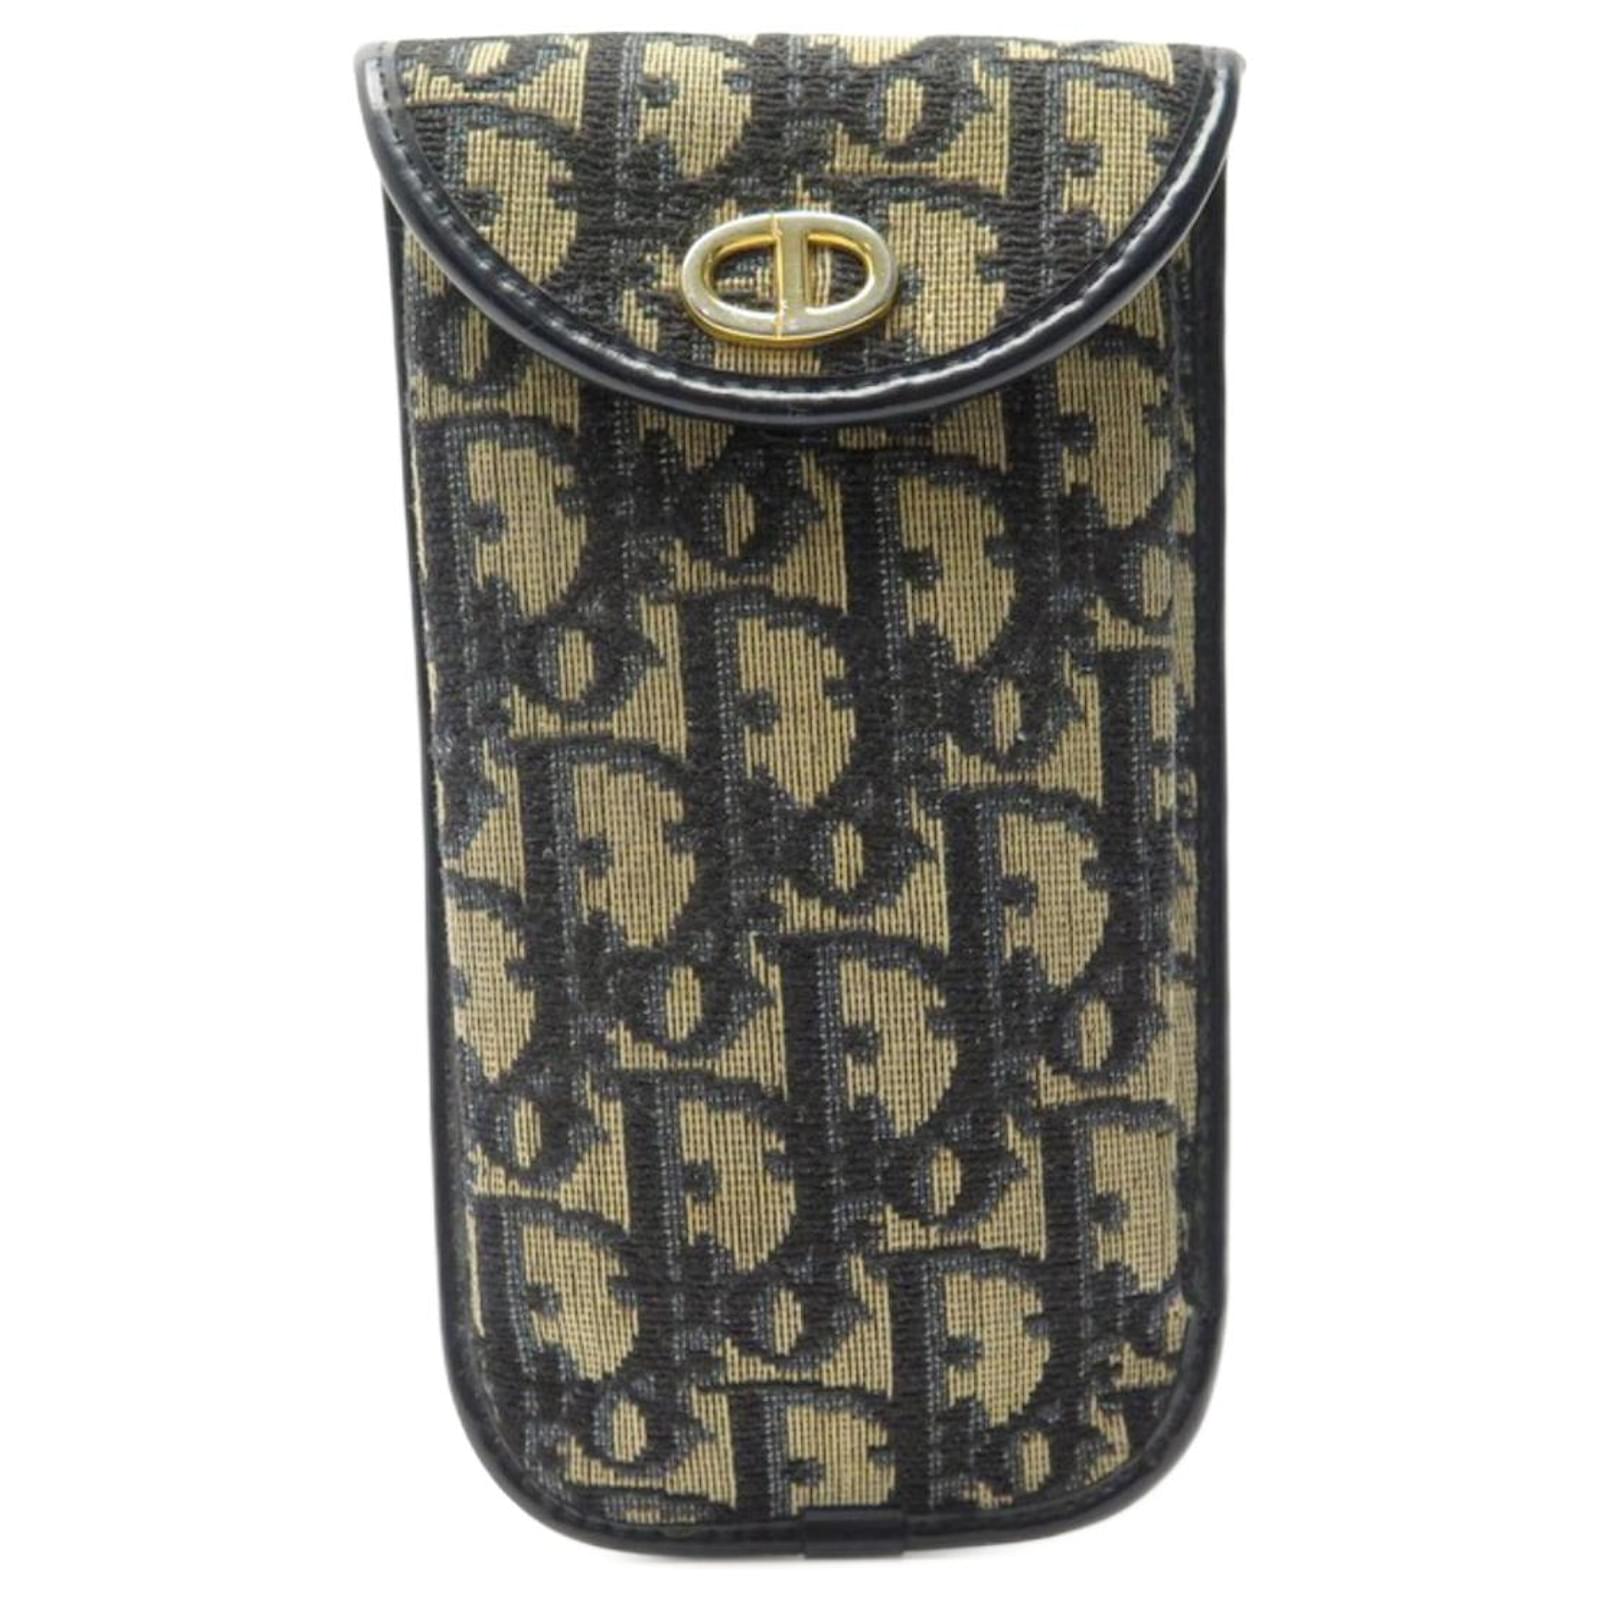 Vintage Gucci bag monogram with glasses case coin purses